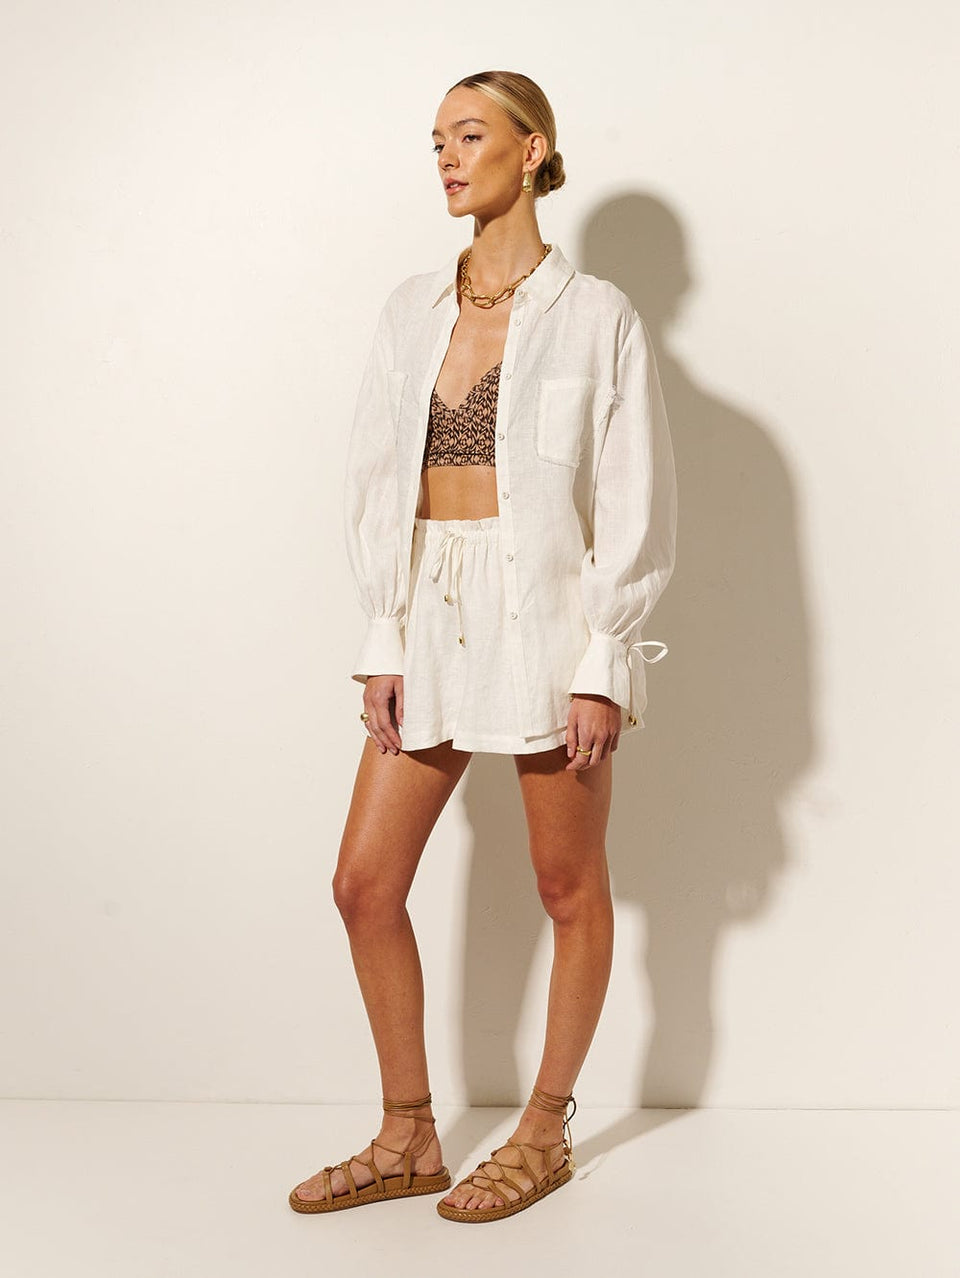 Jacana Short KIVARI | Model wears white linen shorts side view